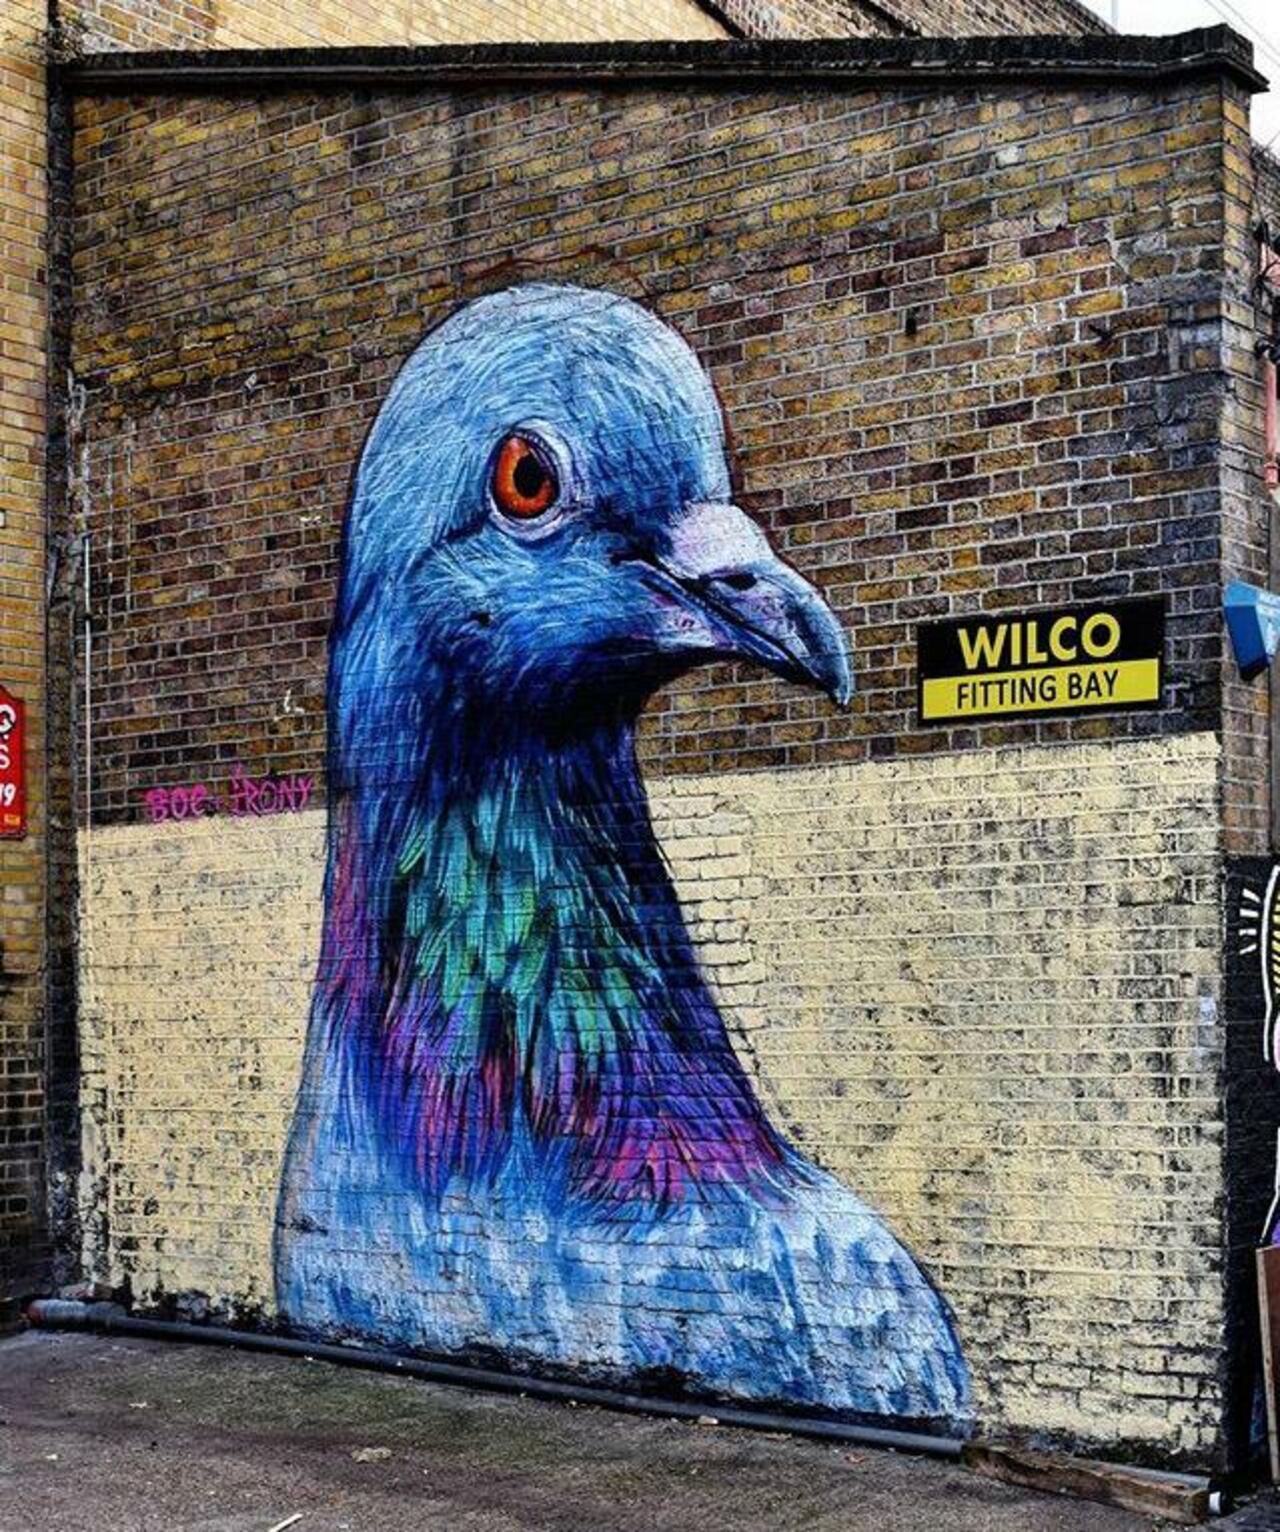 Street Art by Placee Boe & whoamirony in London 

#art #graffiti #mural #streetart http://t.co/xrzzJwFQ25 … … … … http://twitter.com/GoogleStreetArt/status/652357036542414848/photo/1/large?utm_source=fb&utm_medium=fb&utm_campaign=charlesjackso14&utm_content=652361071760670720